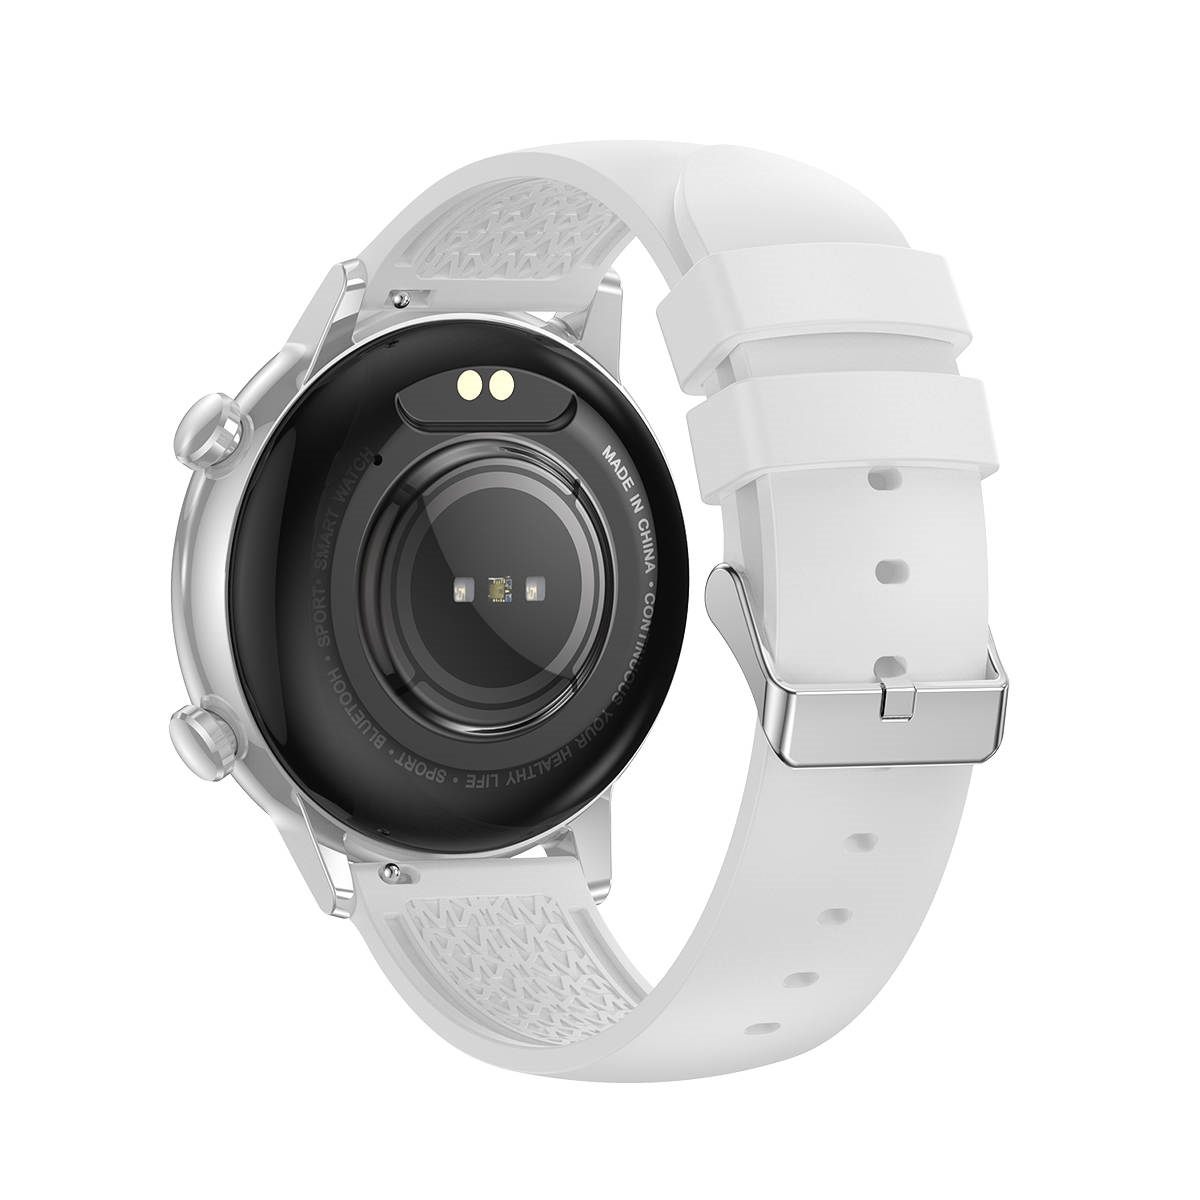 Smartwatch HK39